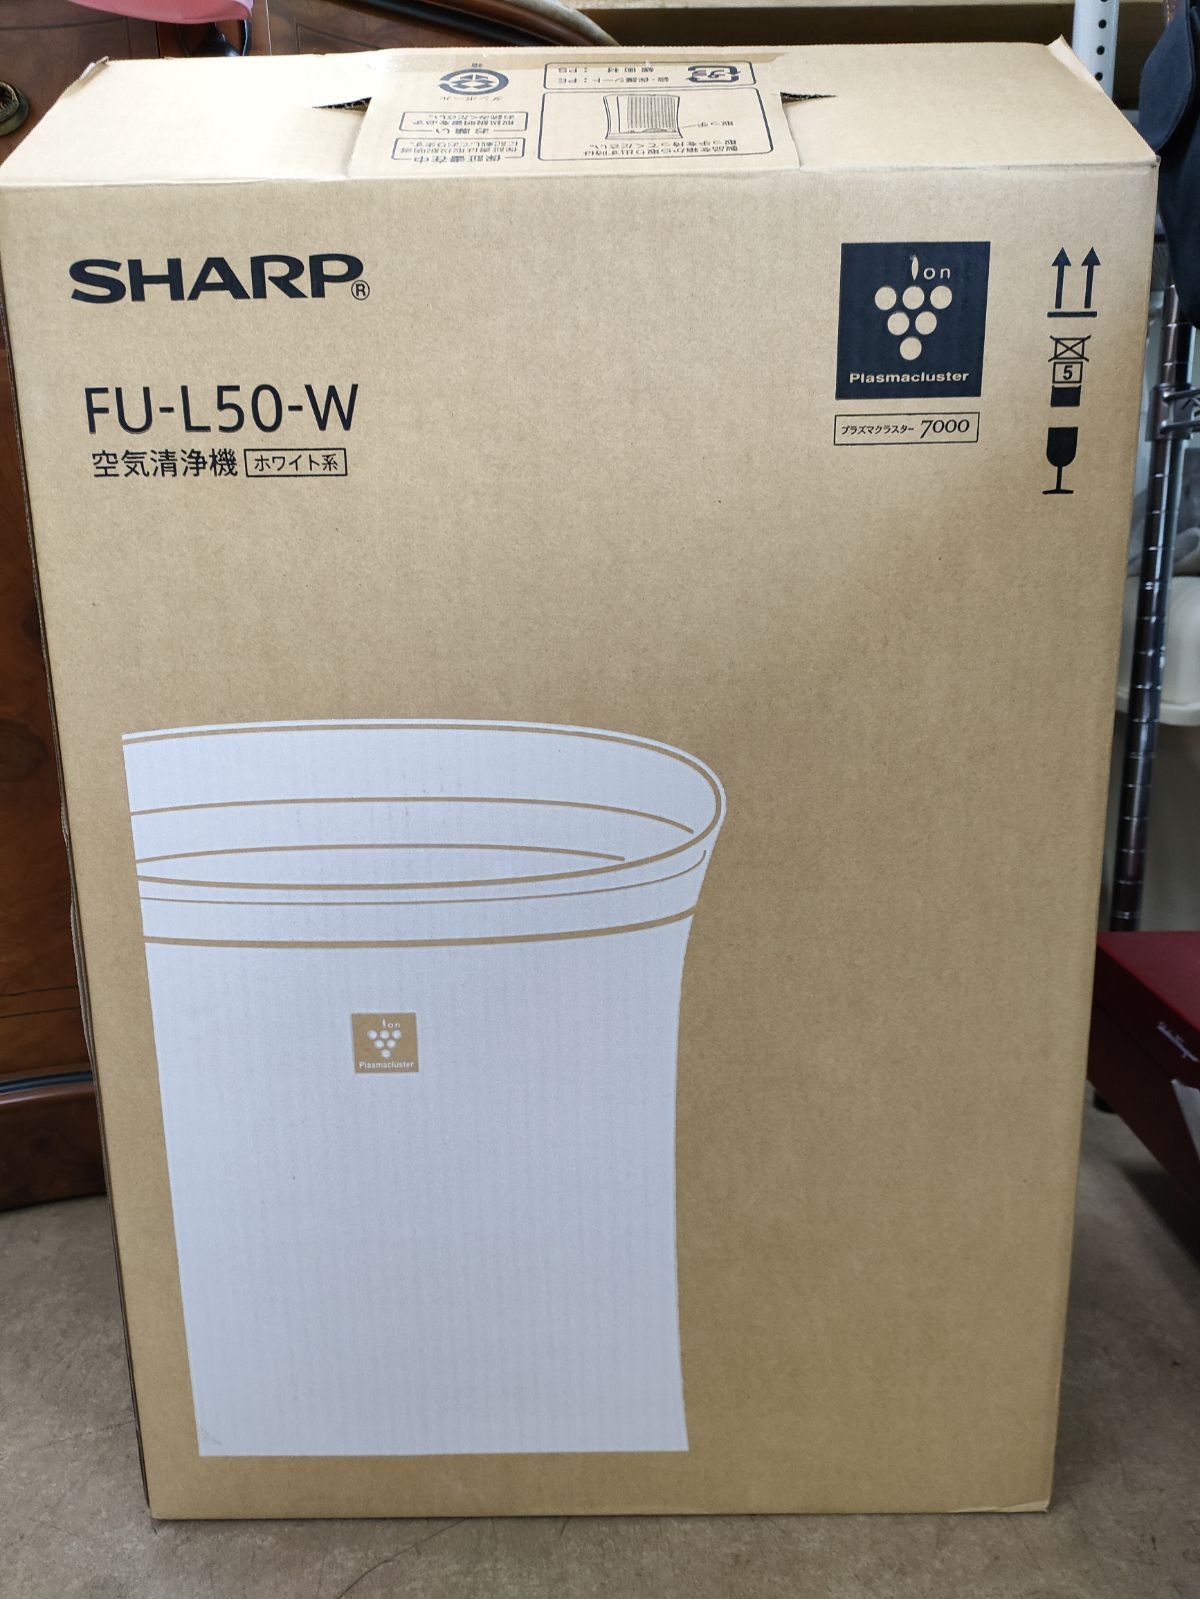 SHARP 空気清浄機 FU-L50 プラズマクラスター7000 ホワイト - 空気清浄 